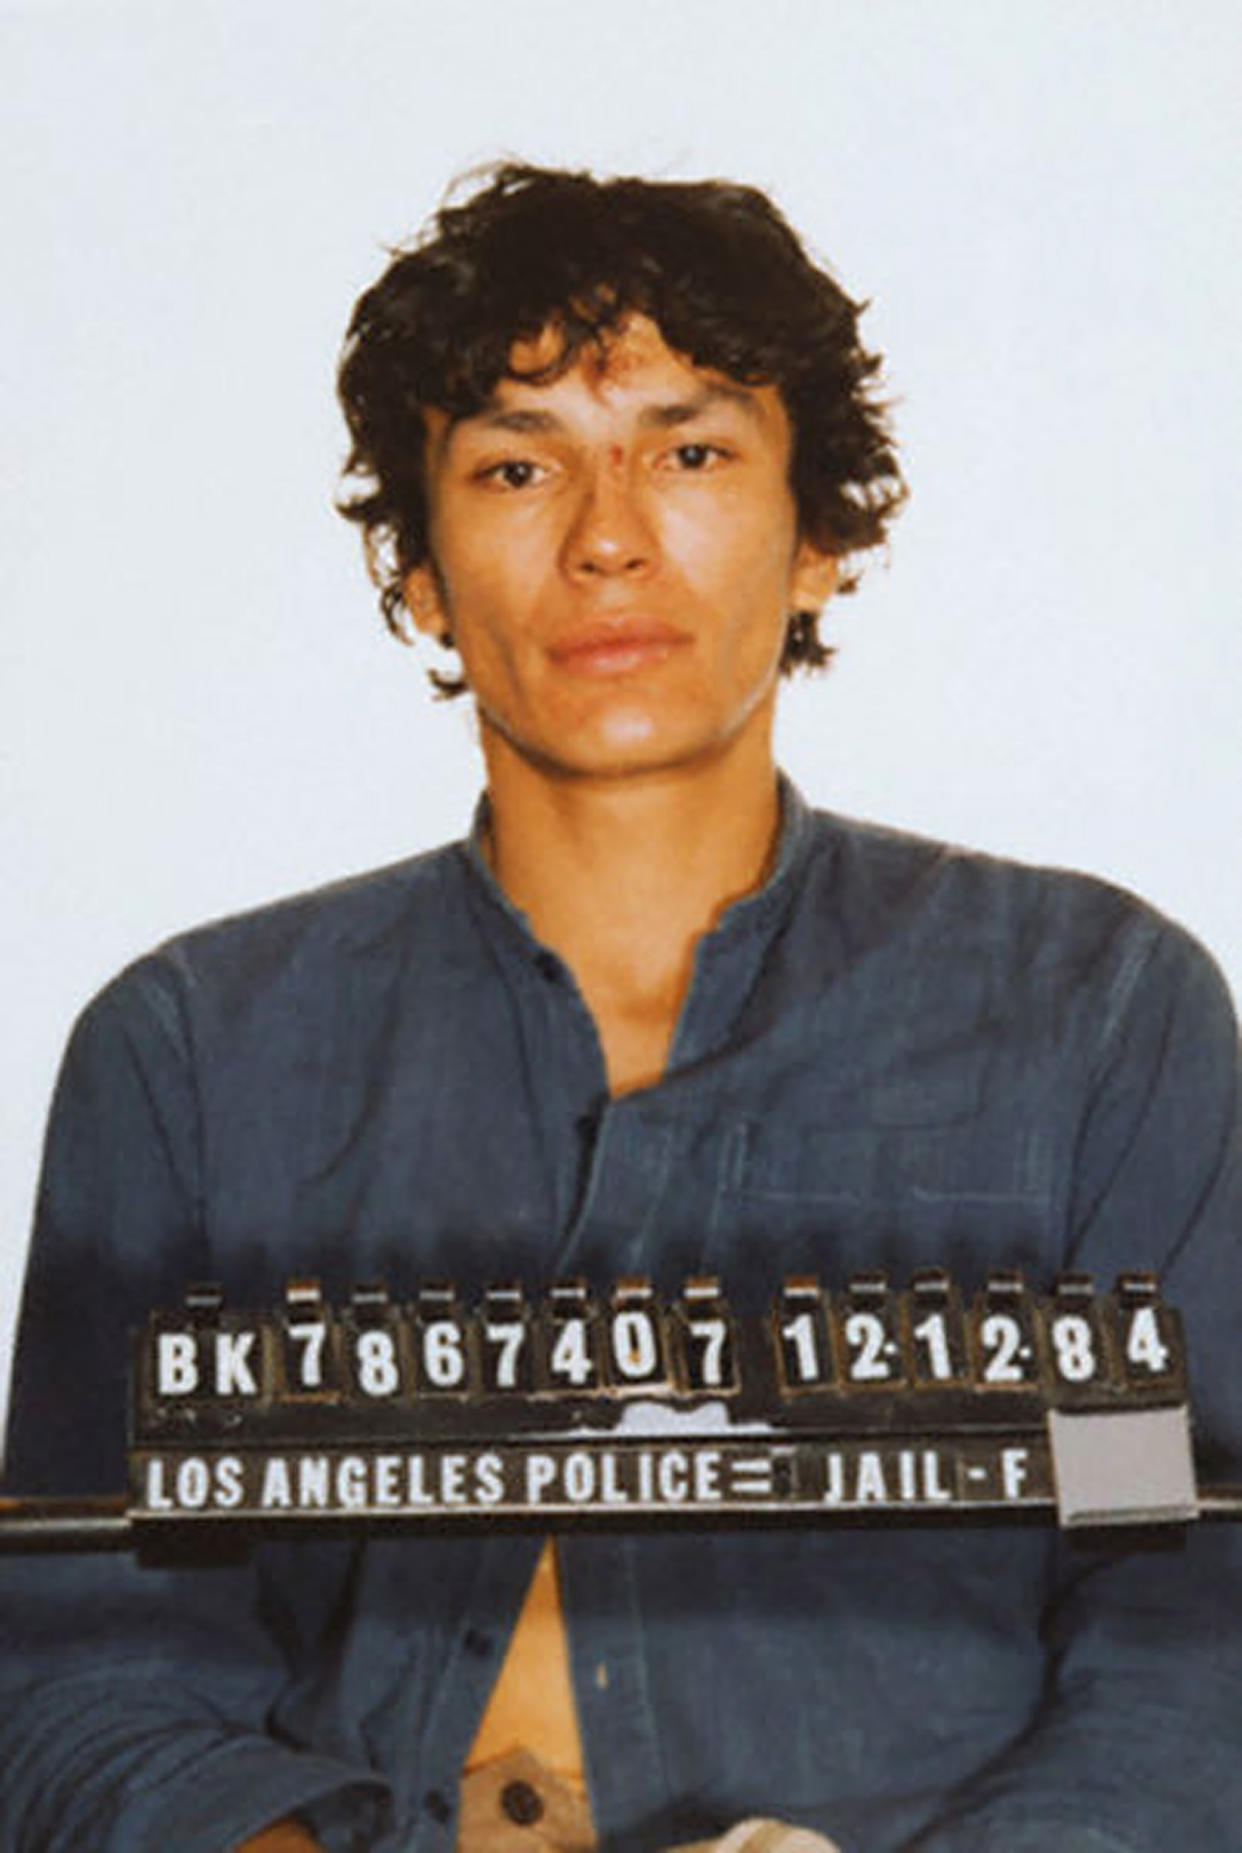 LOS ANGELES - DECEMBER 12: Serial killer Richard Ramirez aka 